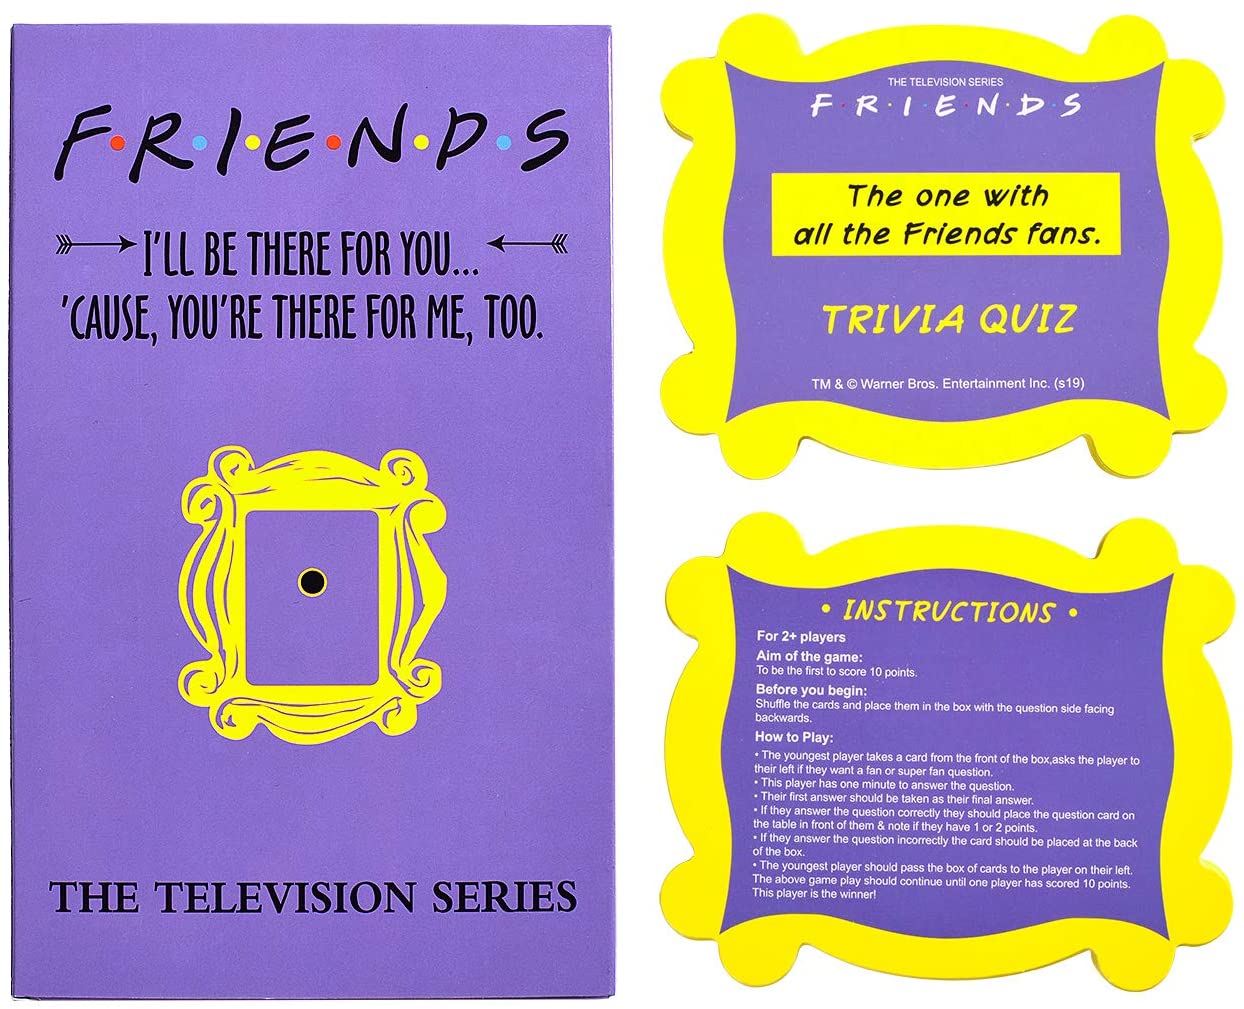 Trivia quiz. Friends TV Shoe.